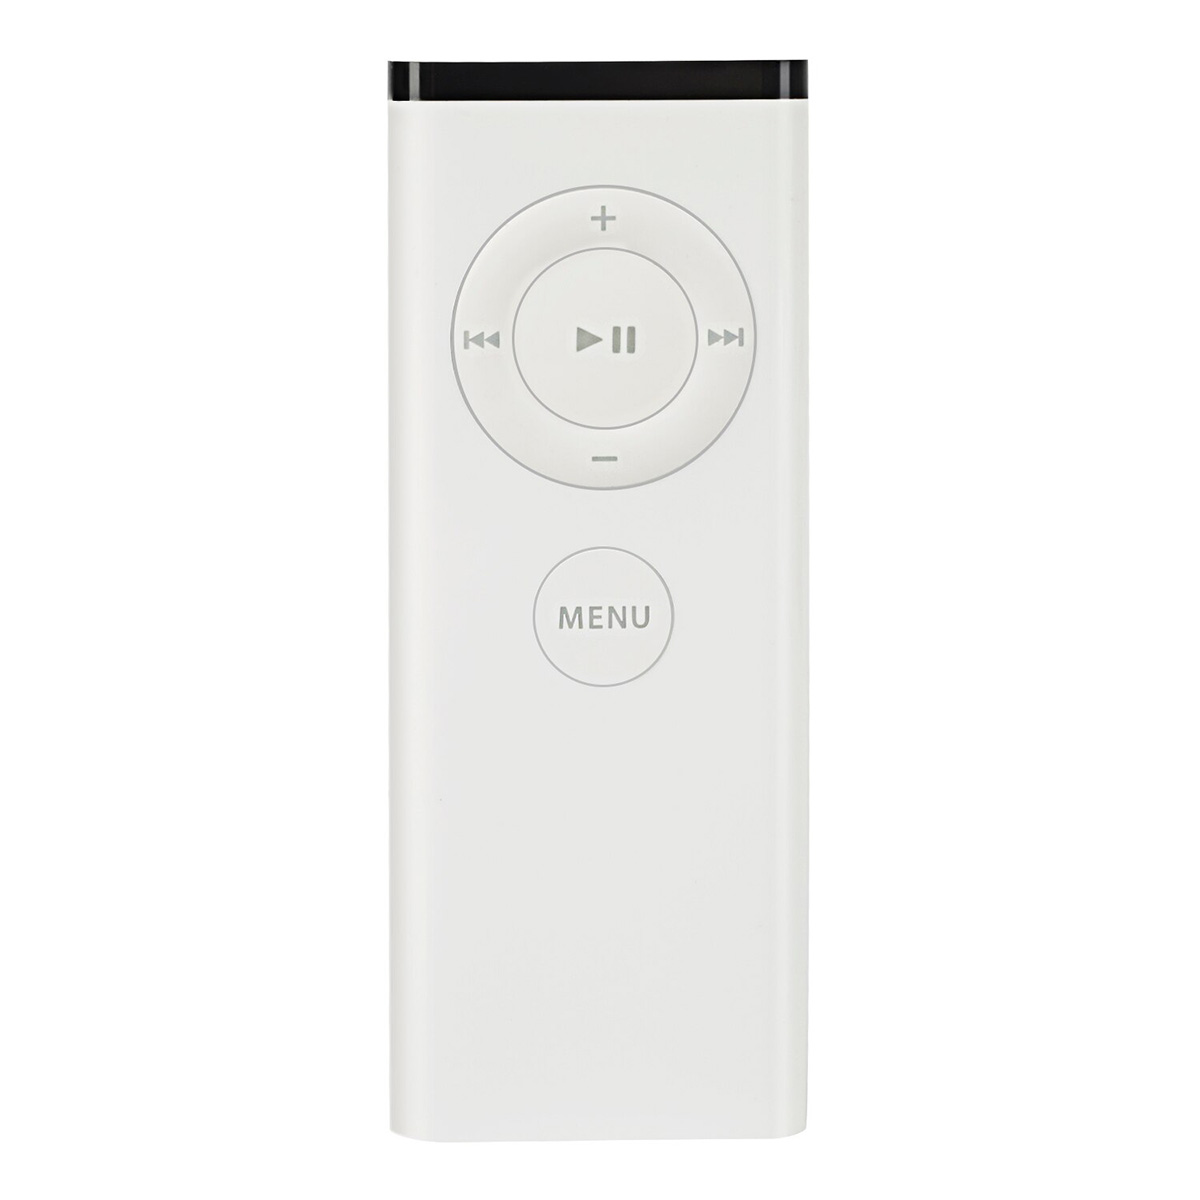 Apple Macintosh • Télécommande A1156 • Apple remote control A1156 • Pour Apple TV – MacMini – iMac – iBook – iPod • Neuve • New